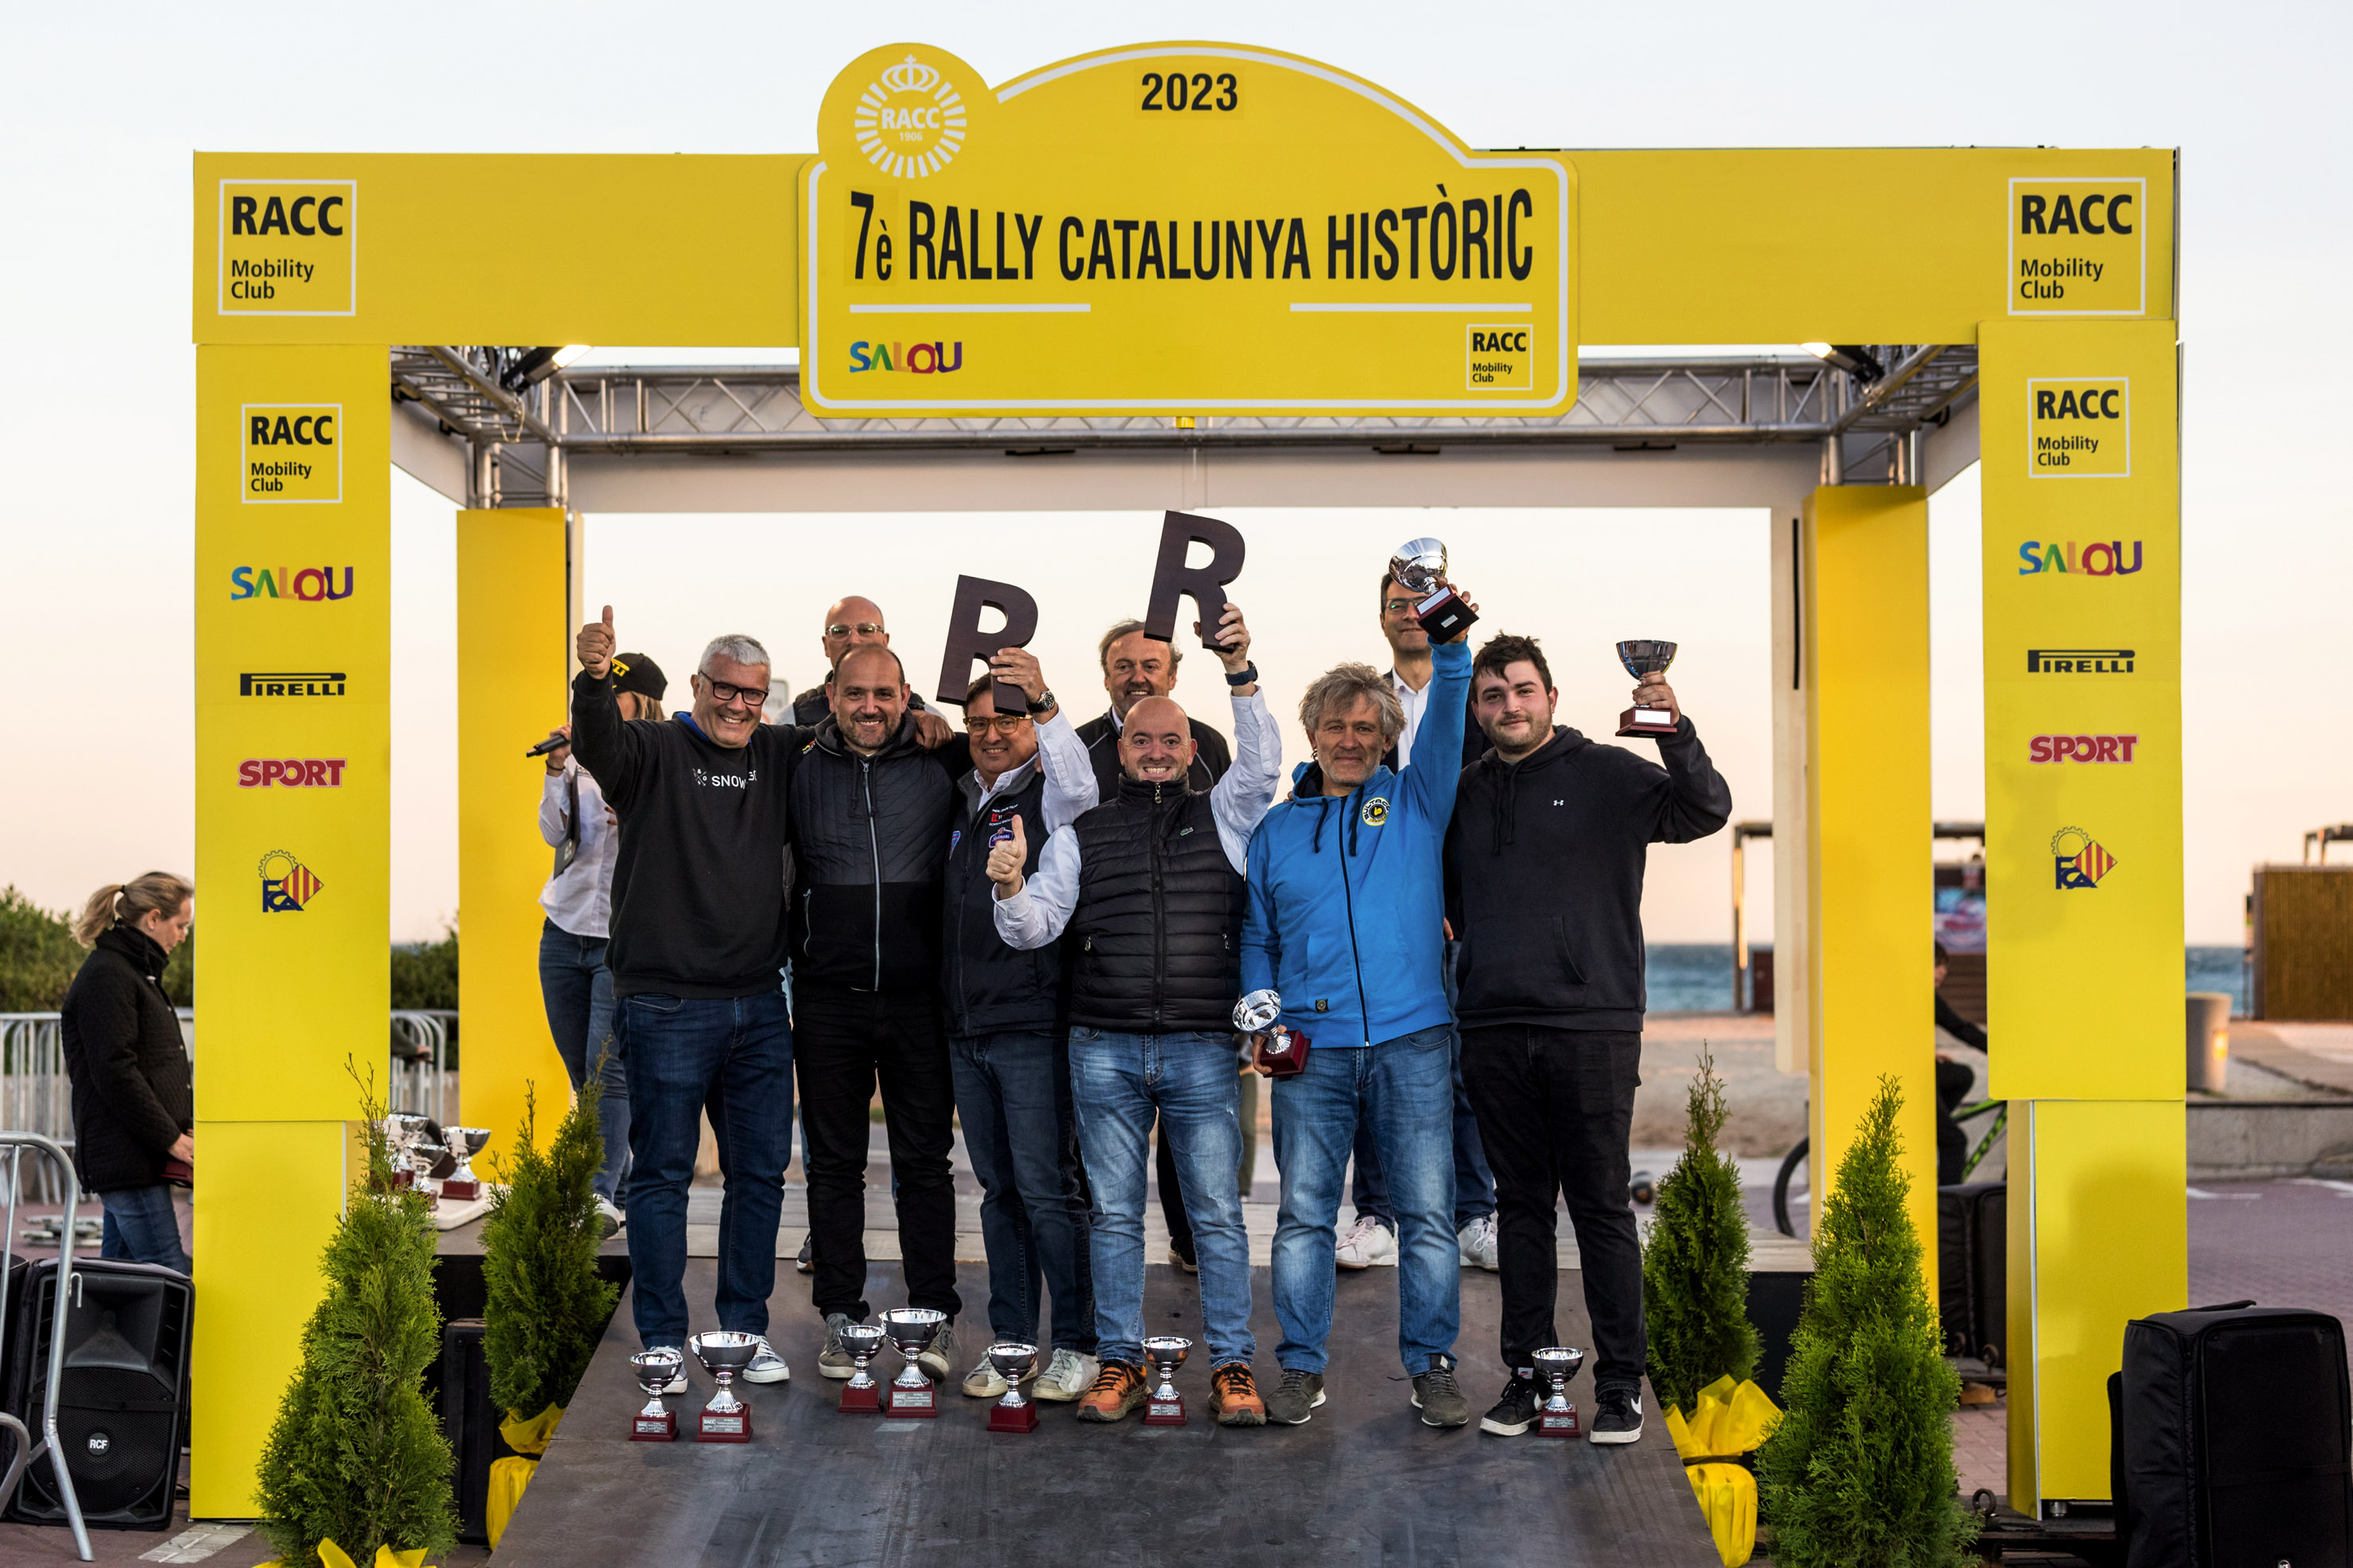 rallycatalunya_historic semanalclasico